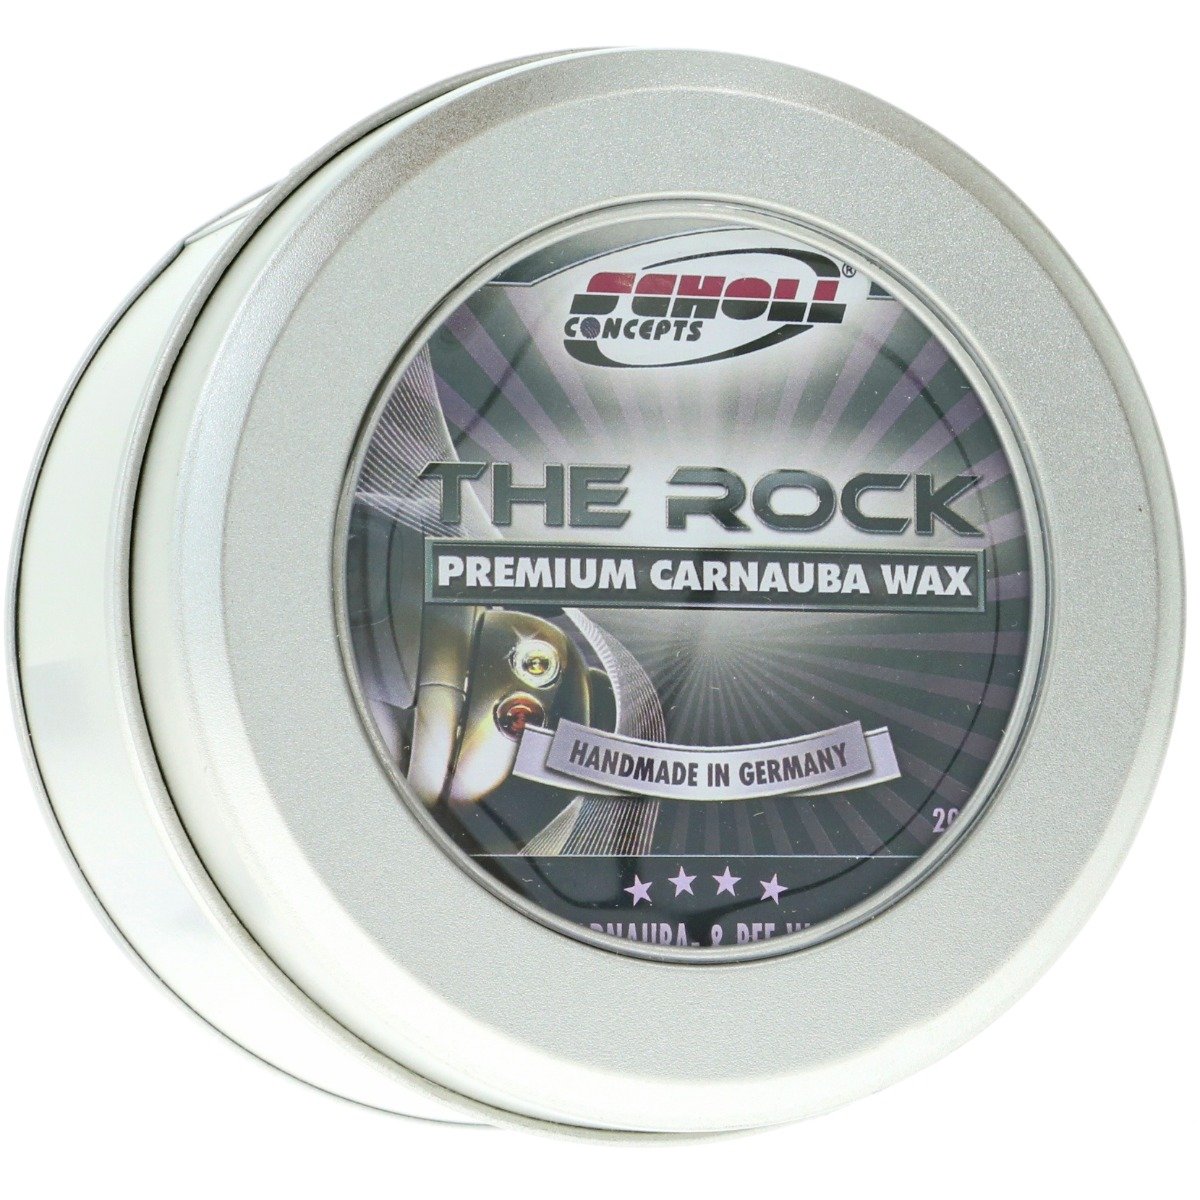 The Rock Premium Carnauba Wax - 200ml